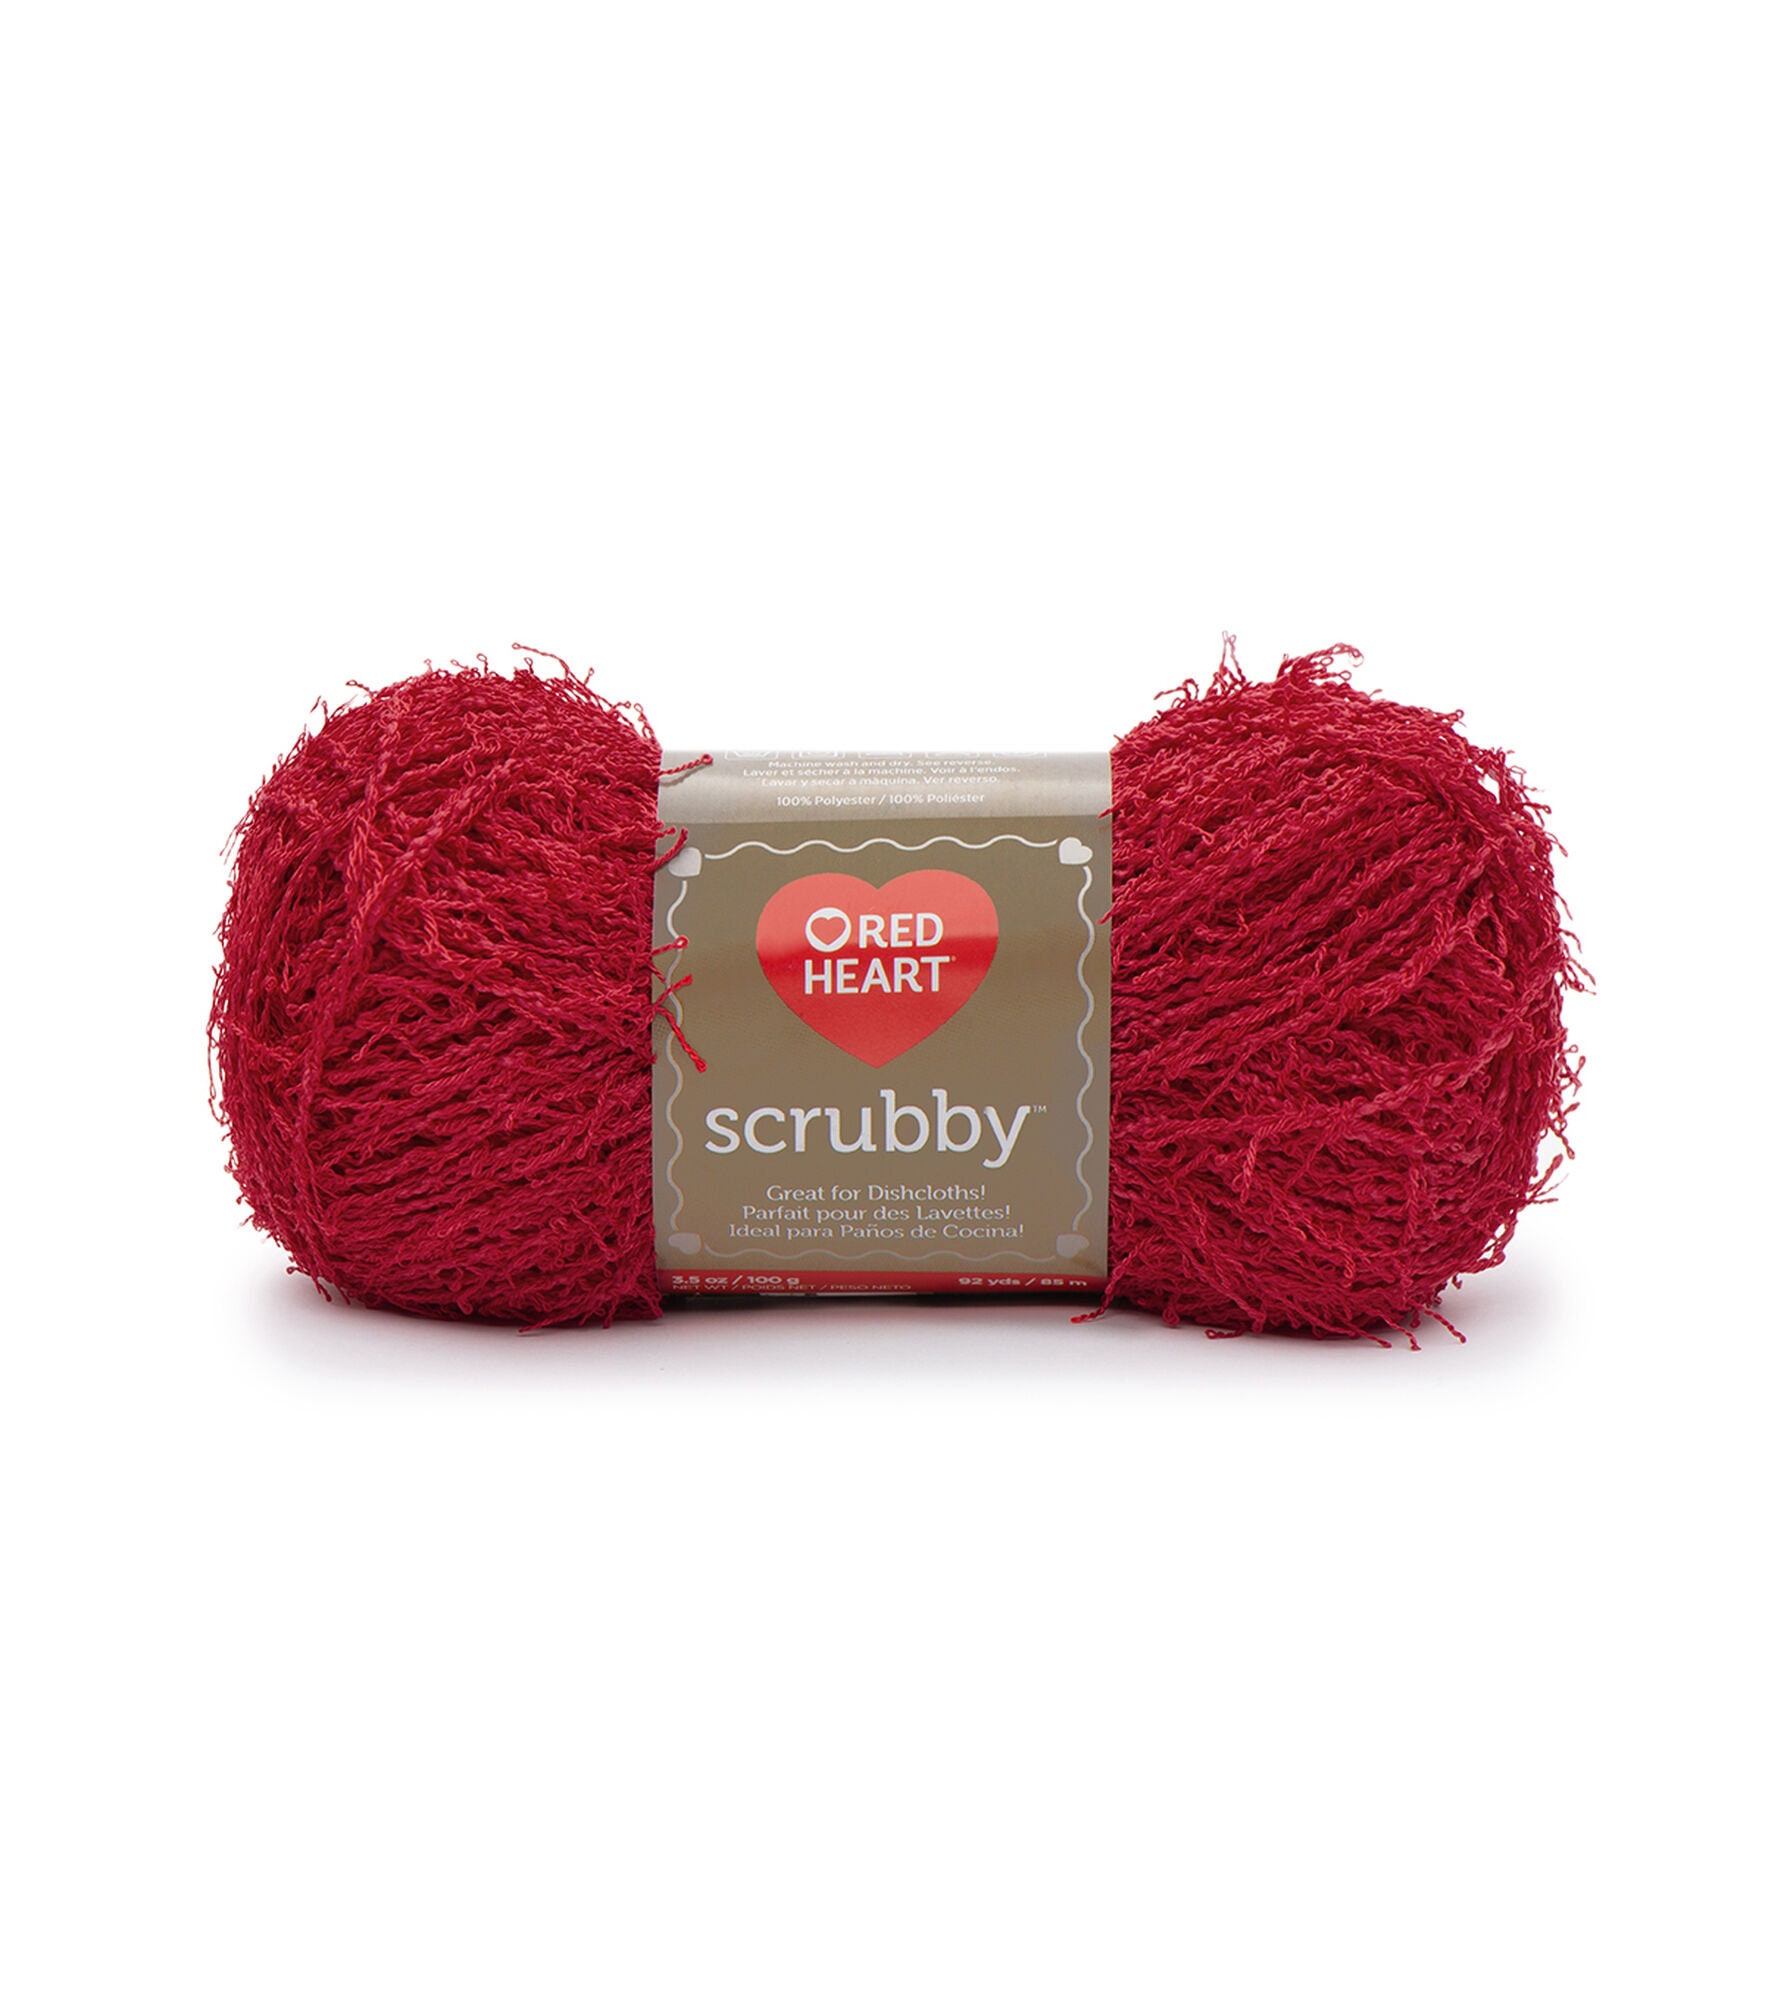 Red Heart Scrubby Yarn Cherry Red Knit Crochet Dishcloths Knitting